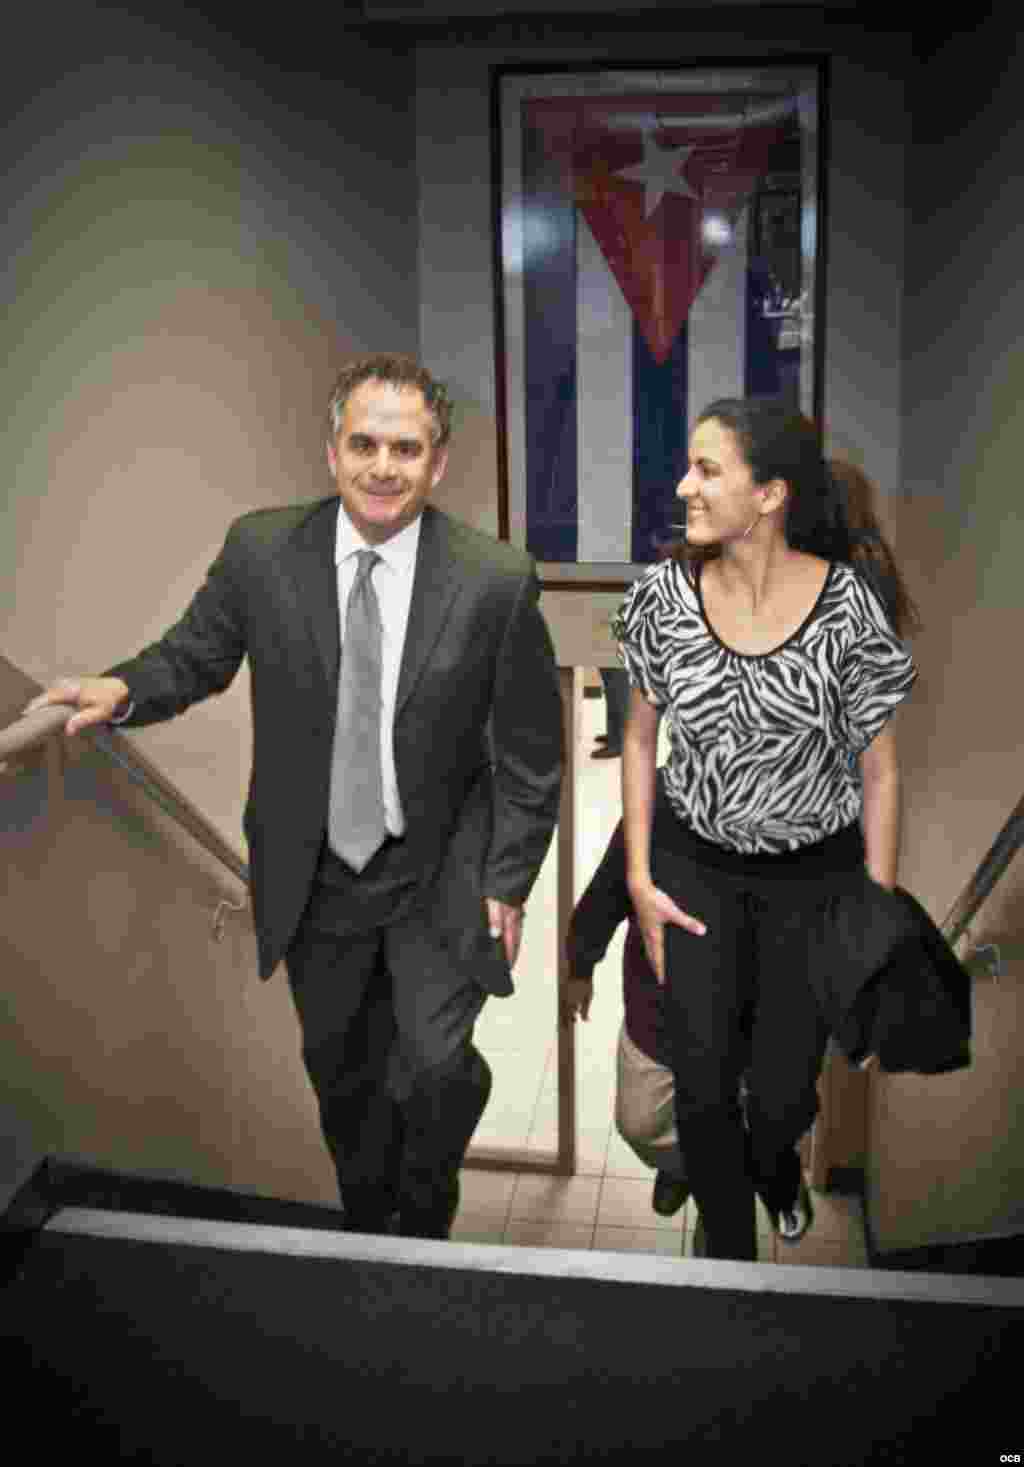 Rosa María Payá makes her way upstairs at the Martis accompanied by OCB Director, Carlos Garcia-Perez